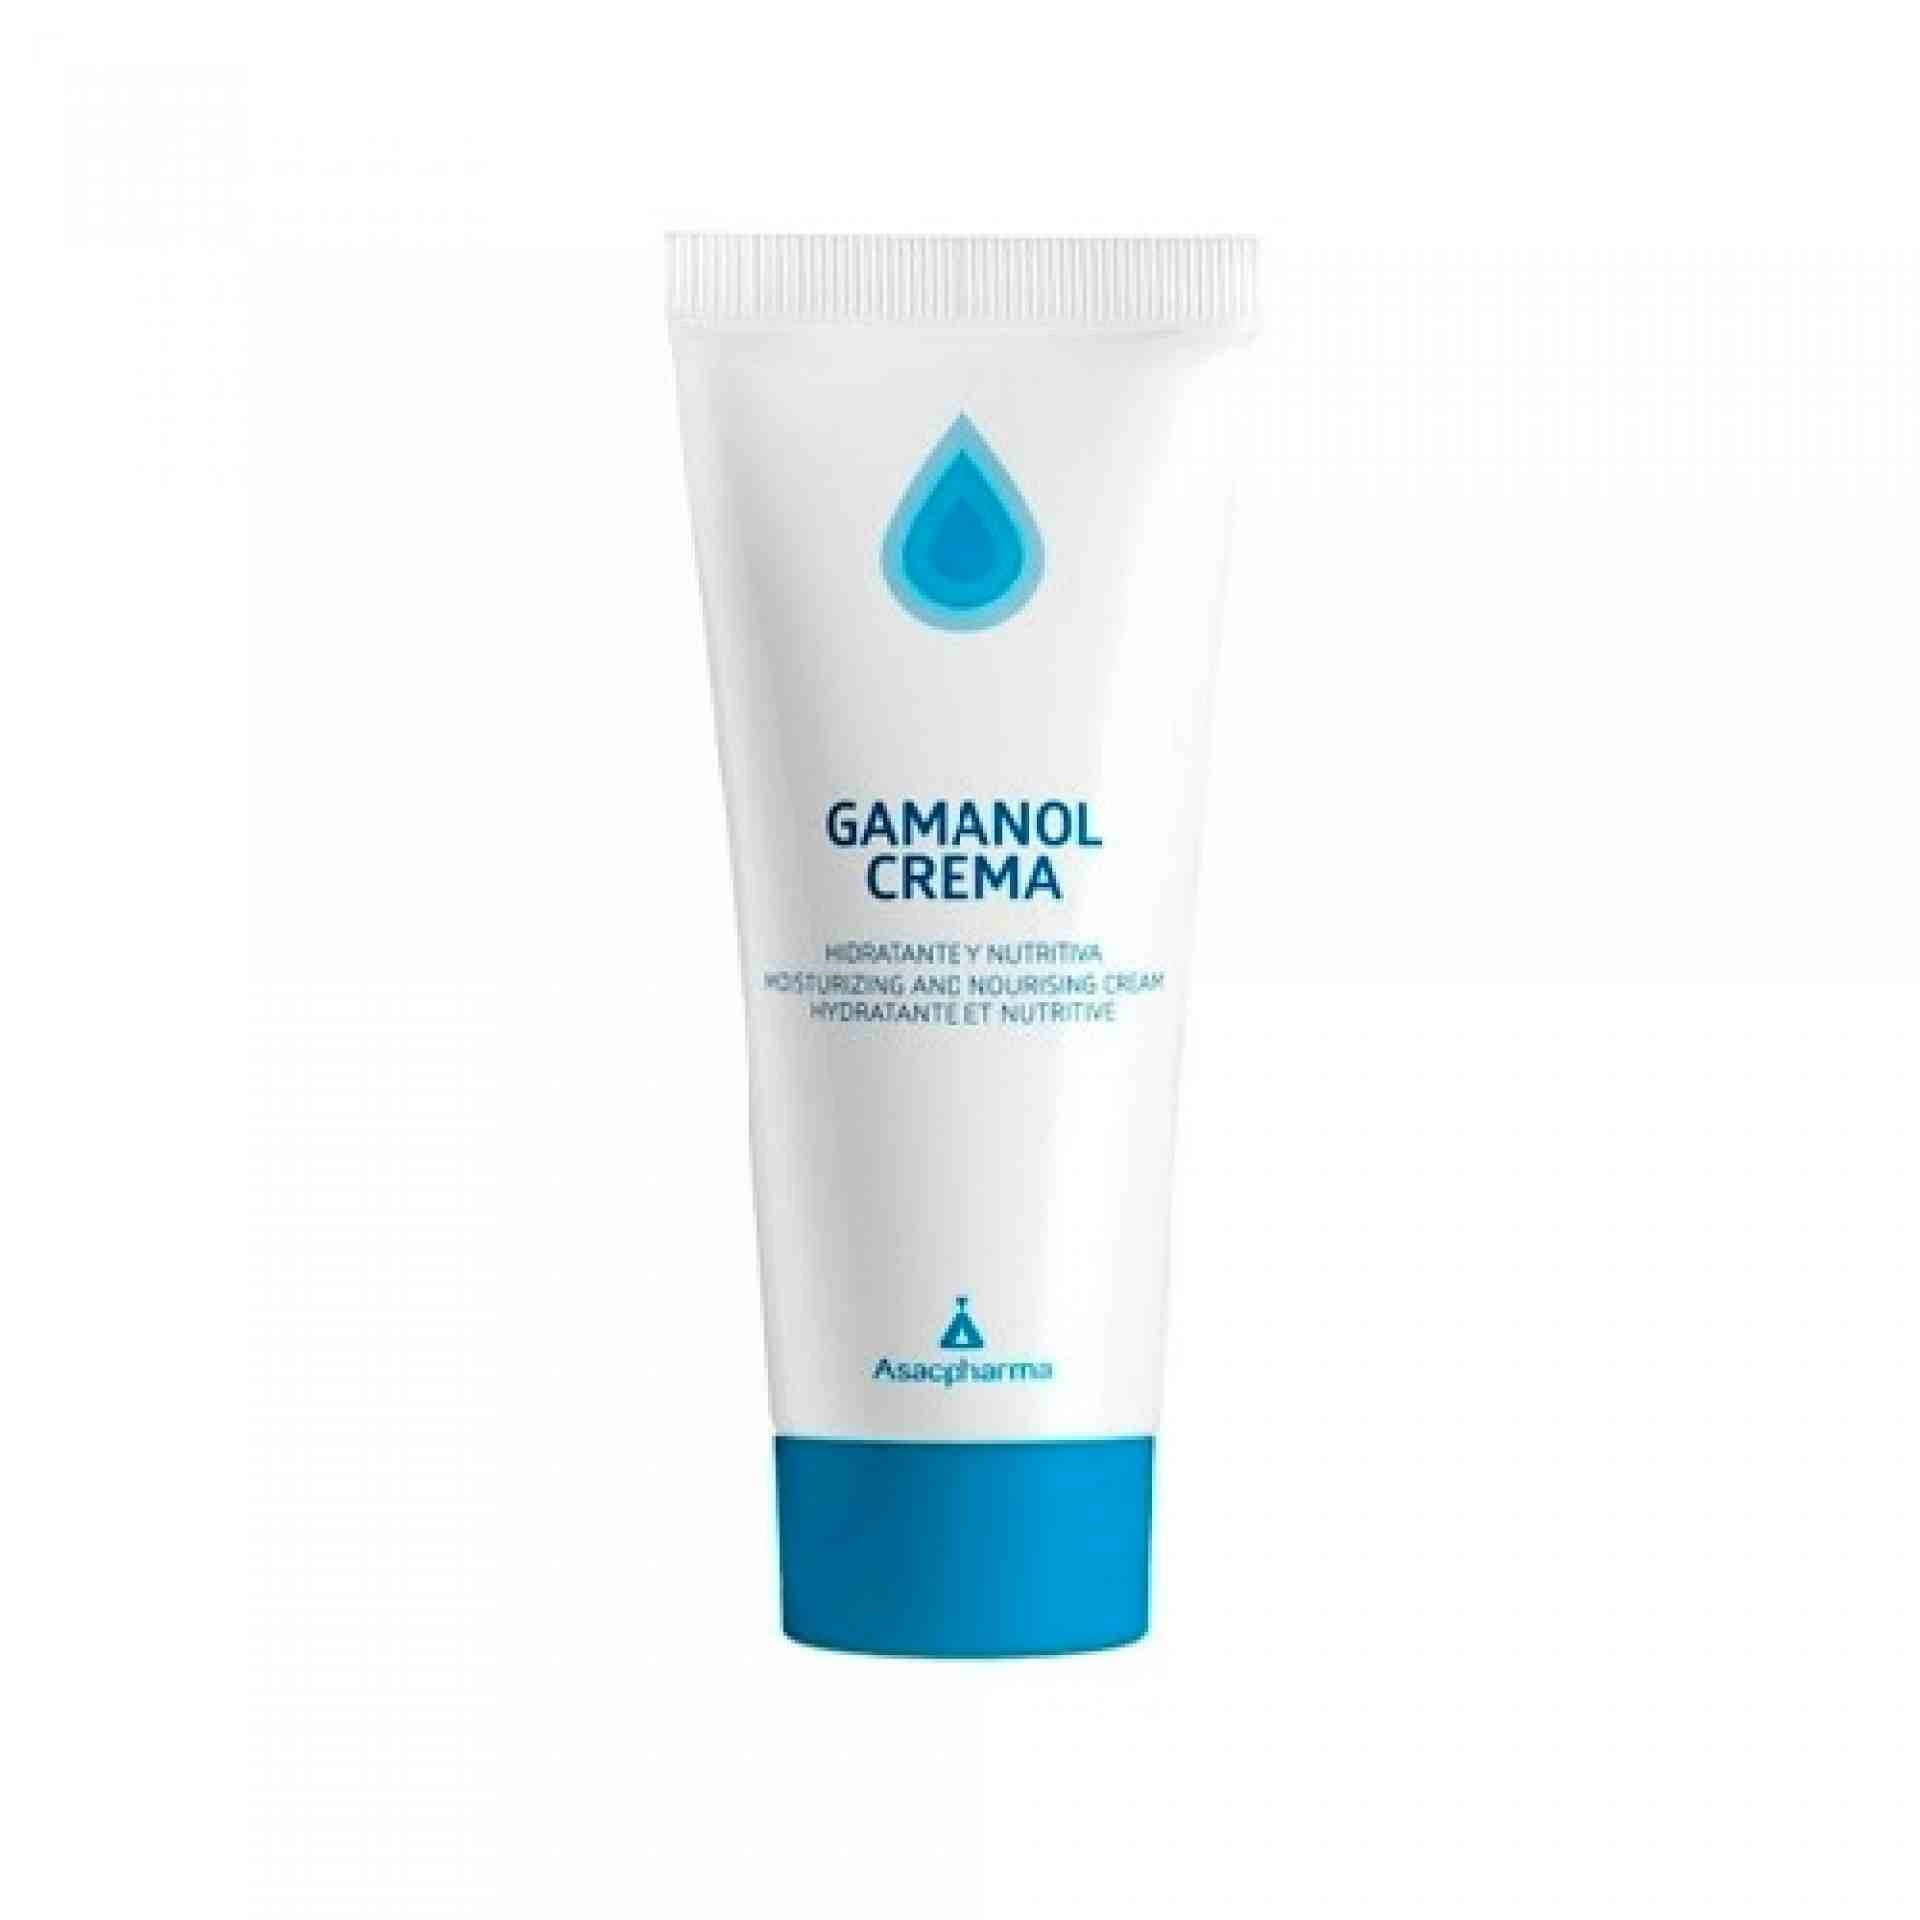 Gamanol crema | Crema para pieles deshidratadas 100 ml - CPI - Atache ®